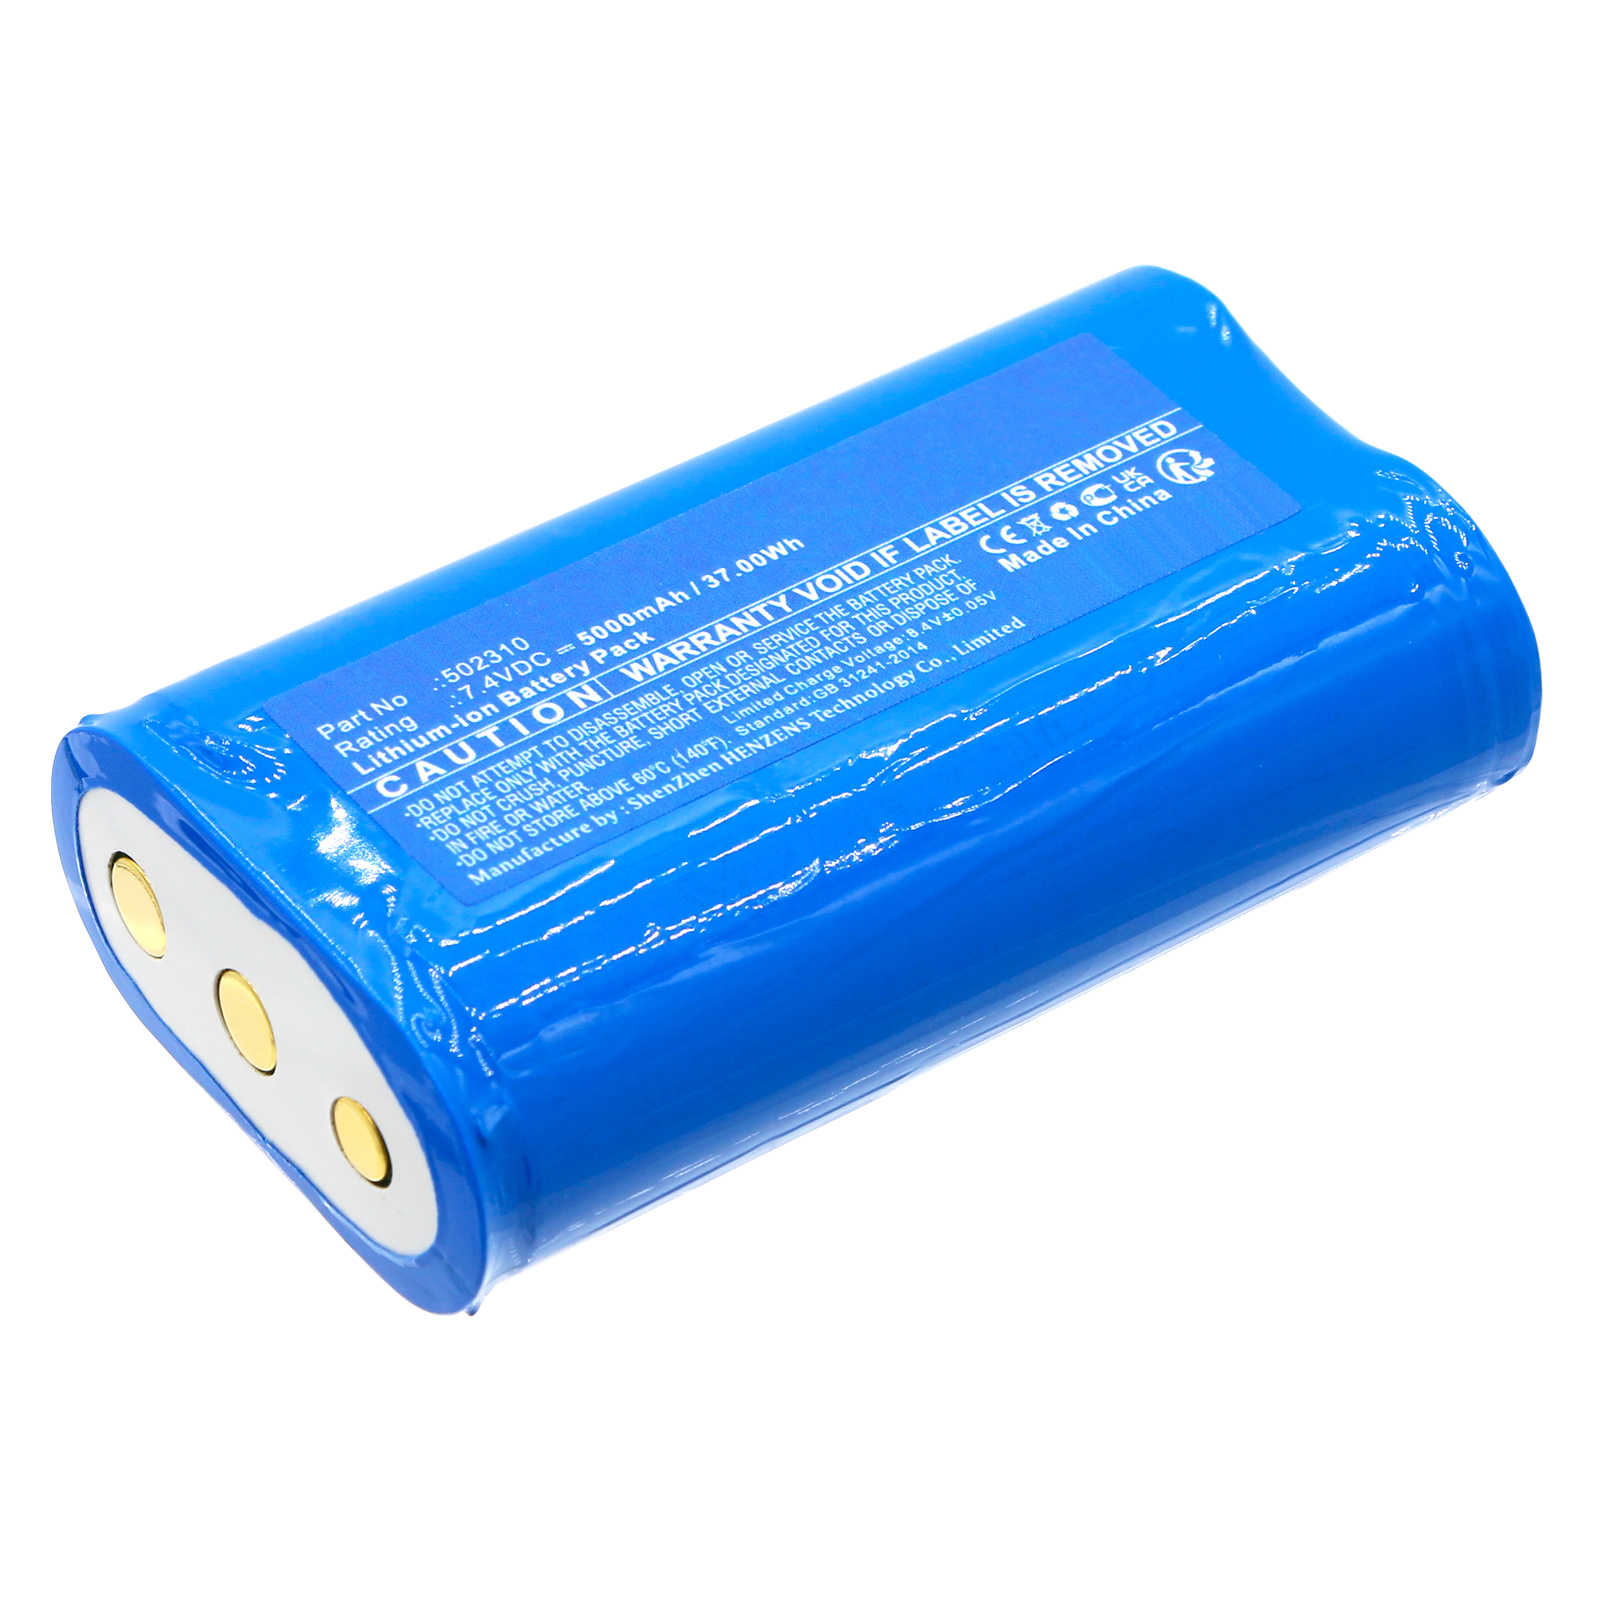 Synergy Digital Flashlight Battery, Compatible with Ledlenser 502310 Flashlight Battery (Li-ion, 7.4V, 5000mAh)